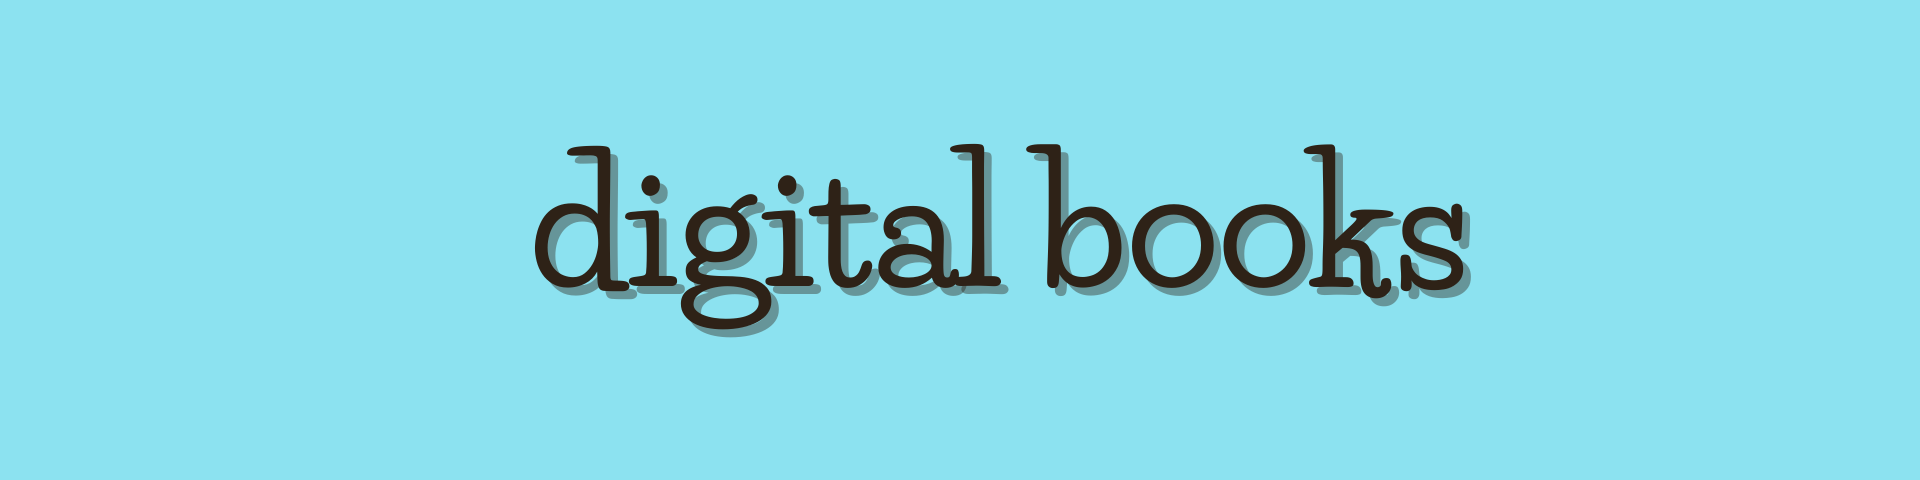 digital books